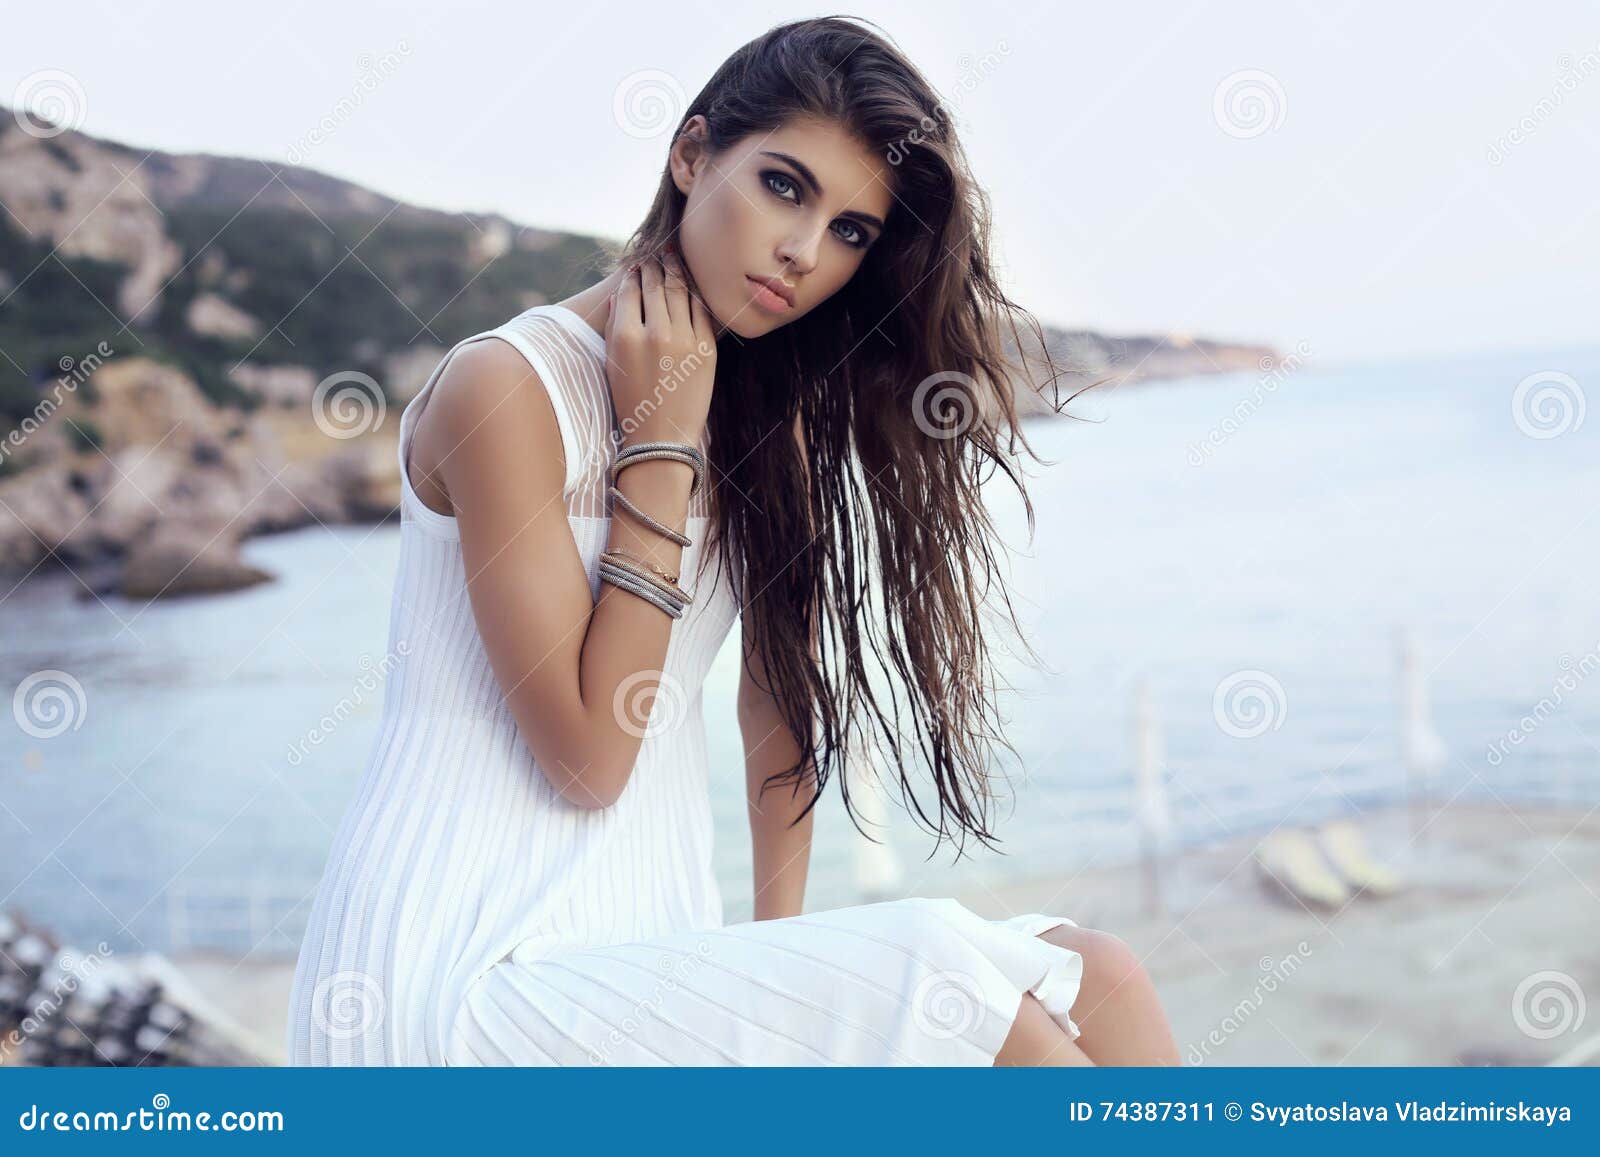 gorgeous woman with dark hair in elegant dress on beach